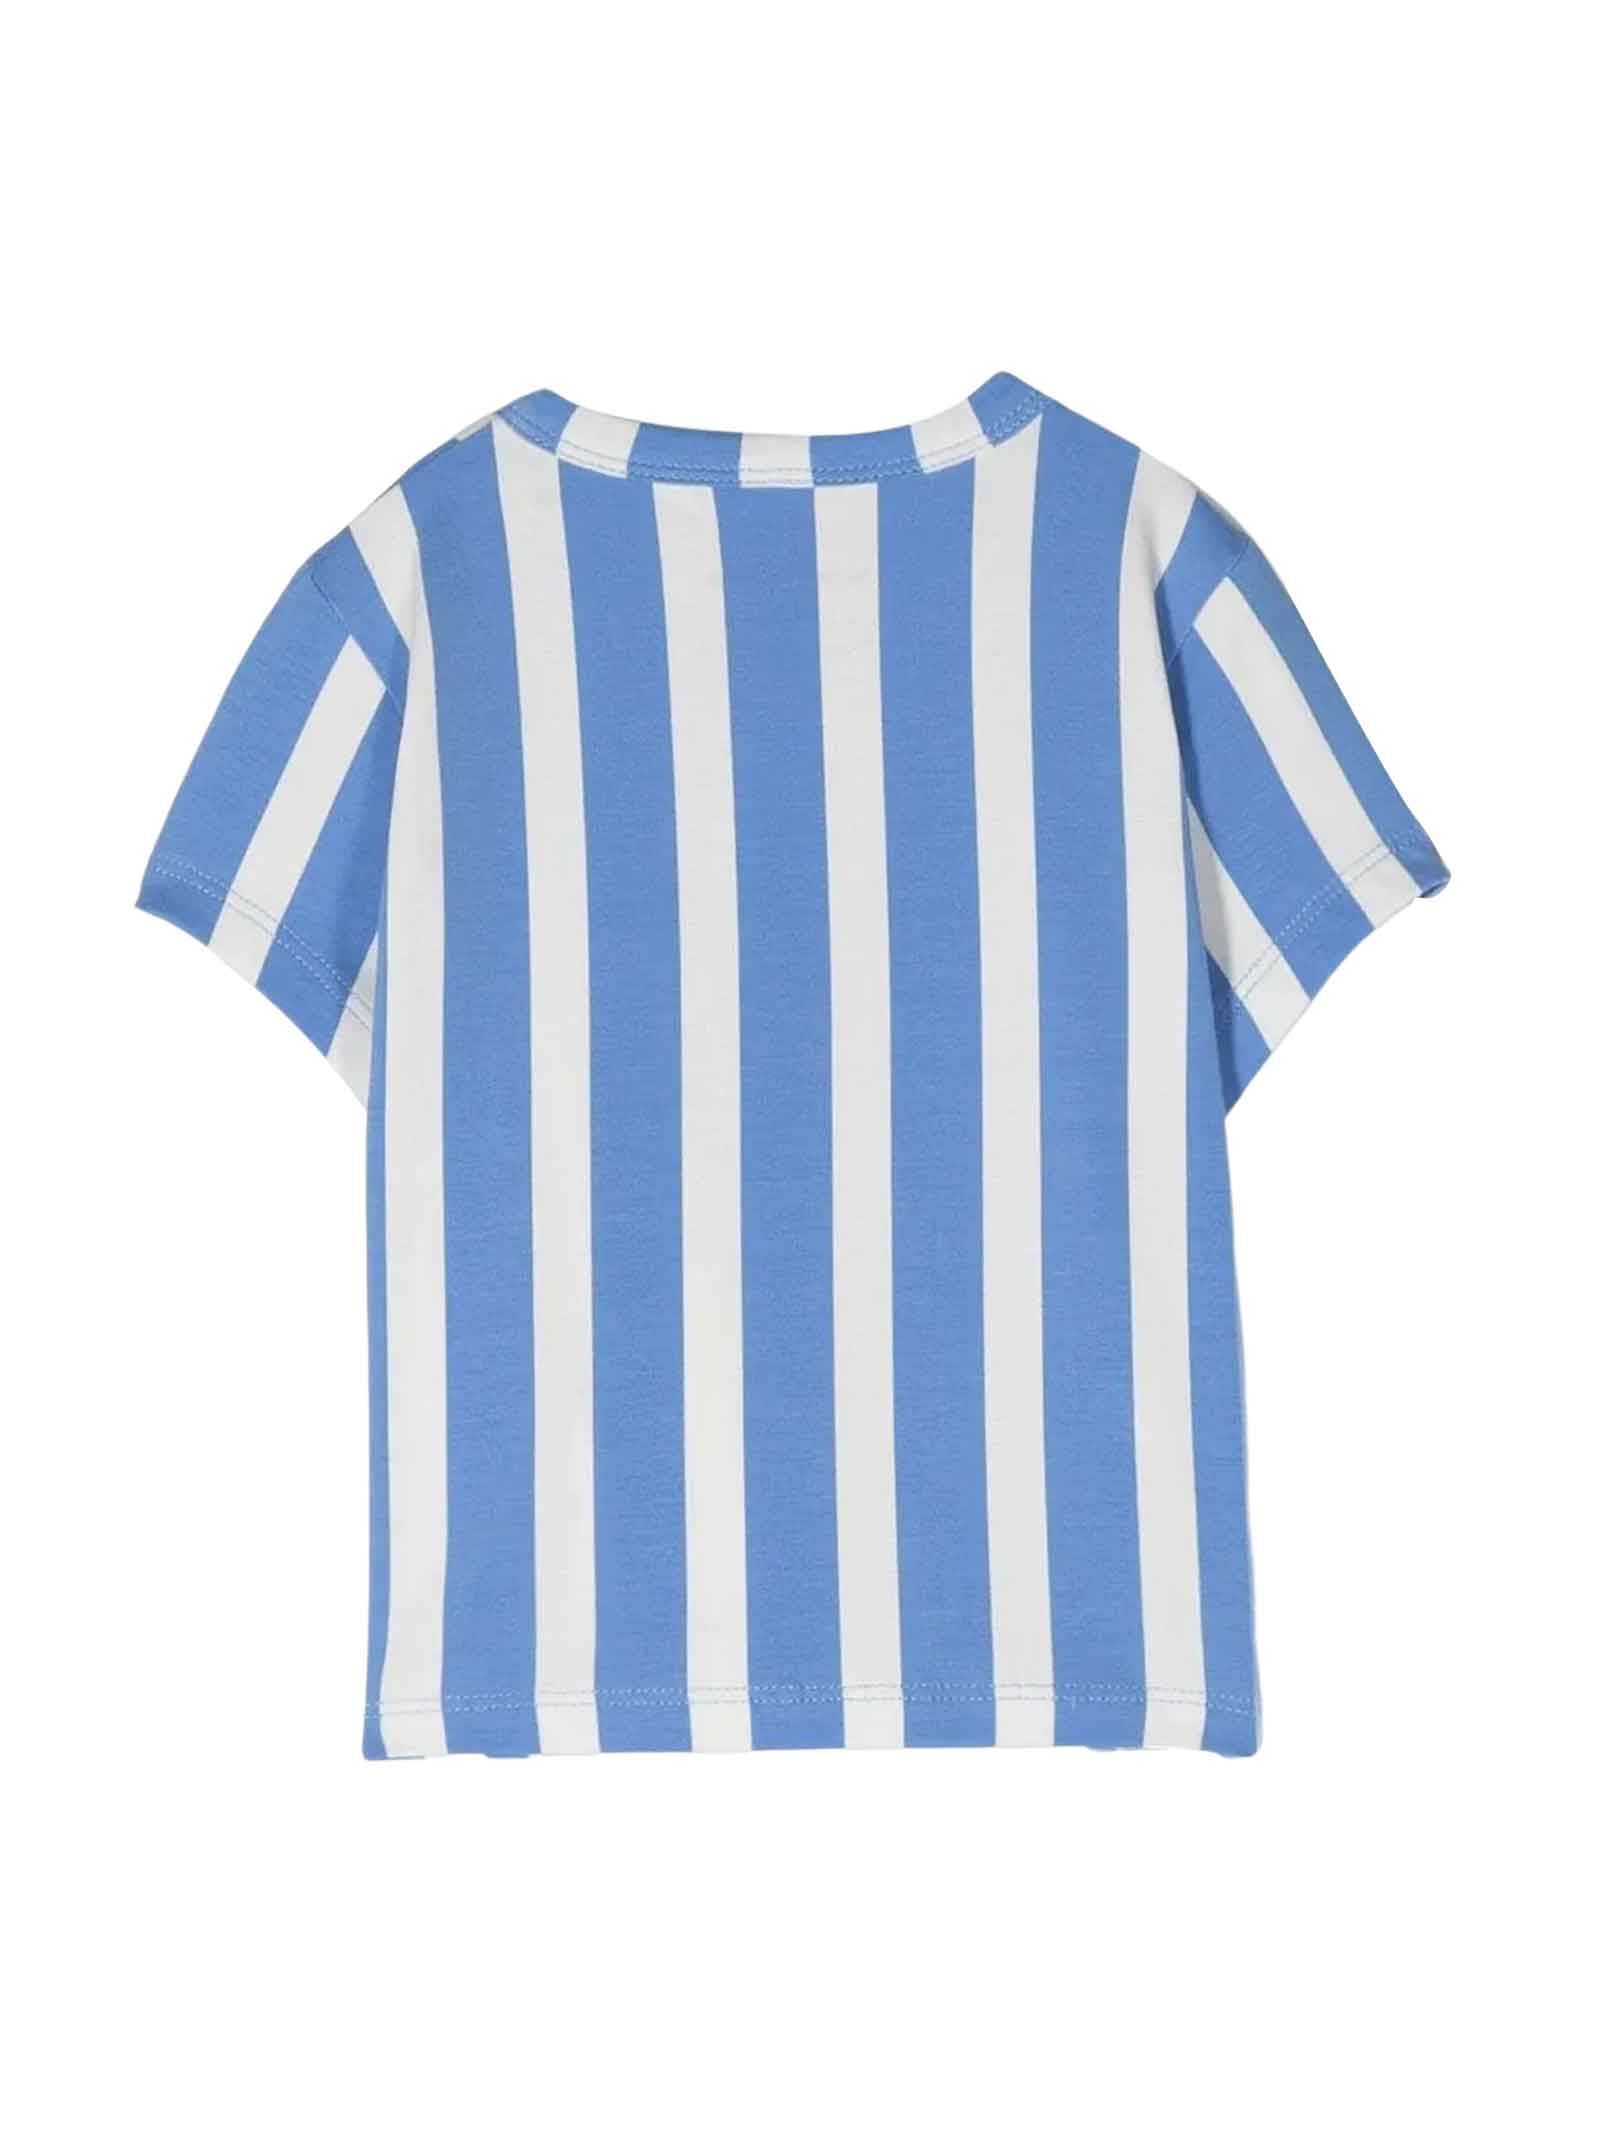 Mini Rodini Babies' Blue & White Striped Cotton Ritzratz T-shirt